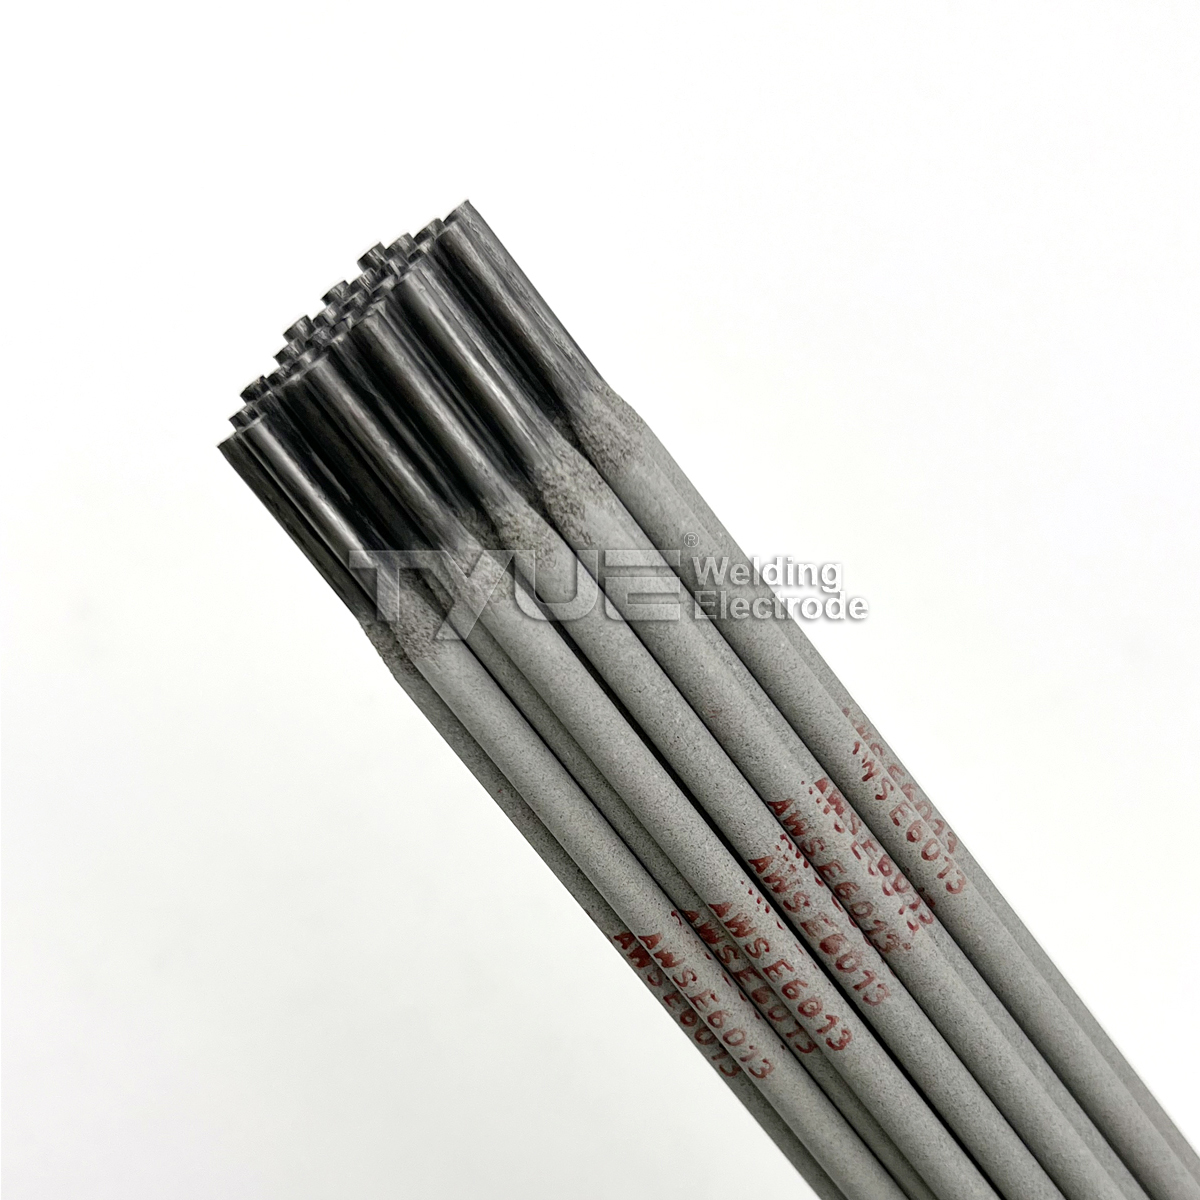 AWS E6013 (J421) Carbon Karfe Welding Electrode Rutile Welding Sanduna